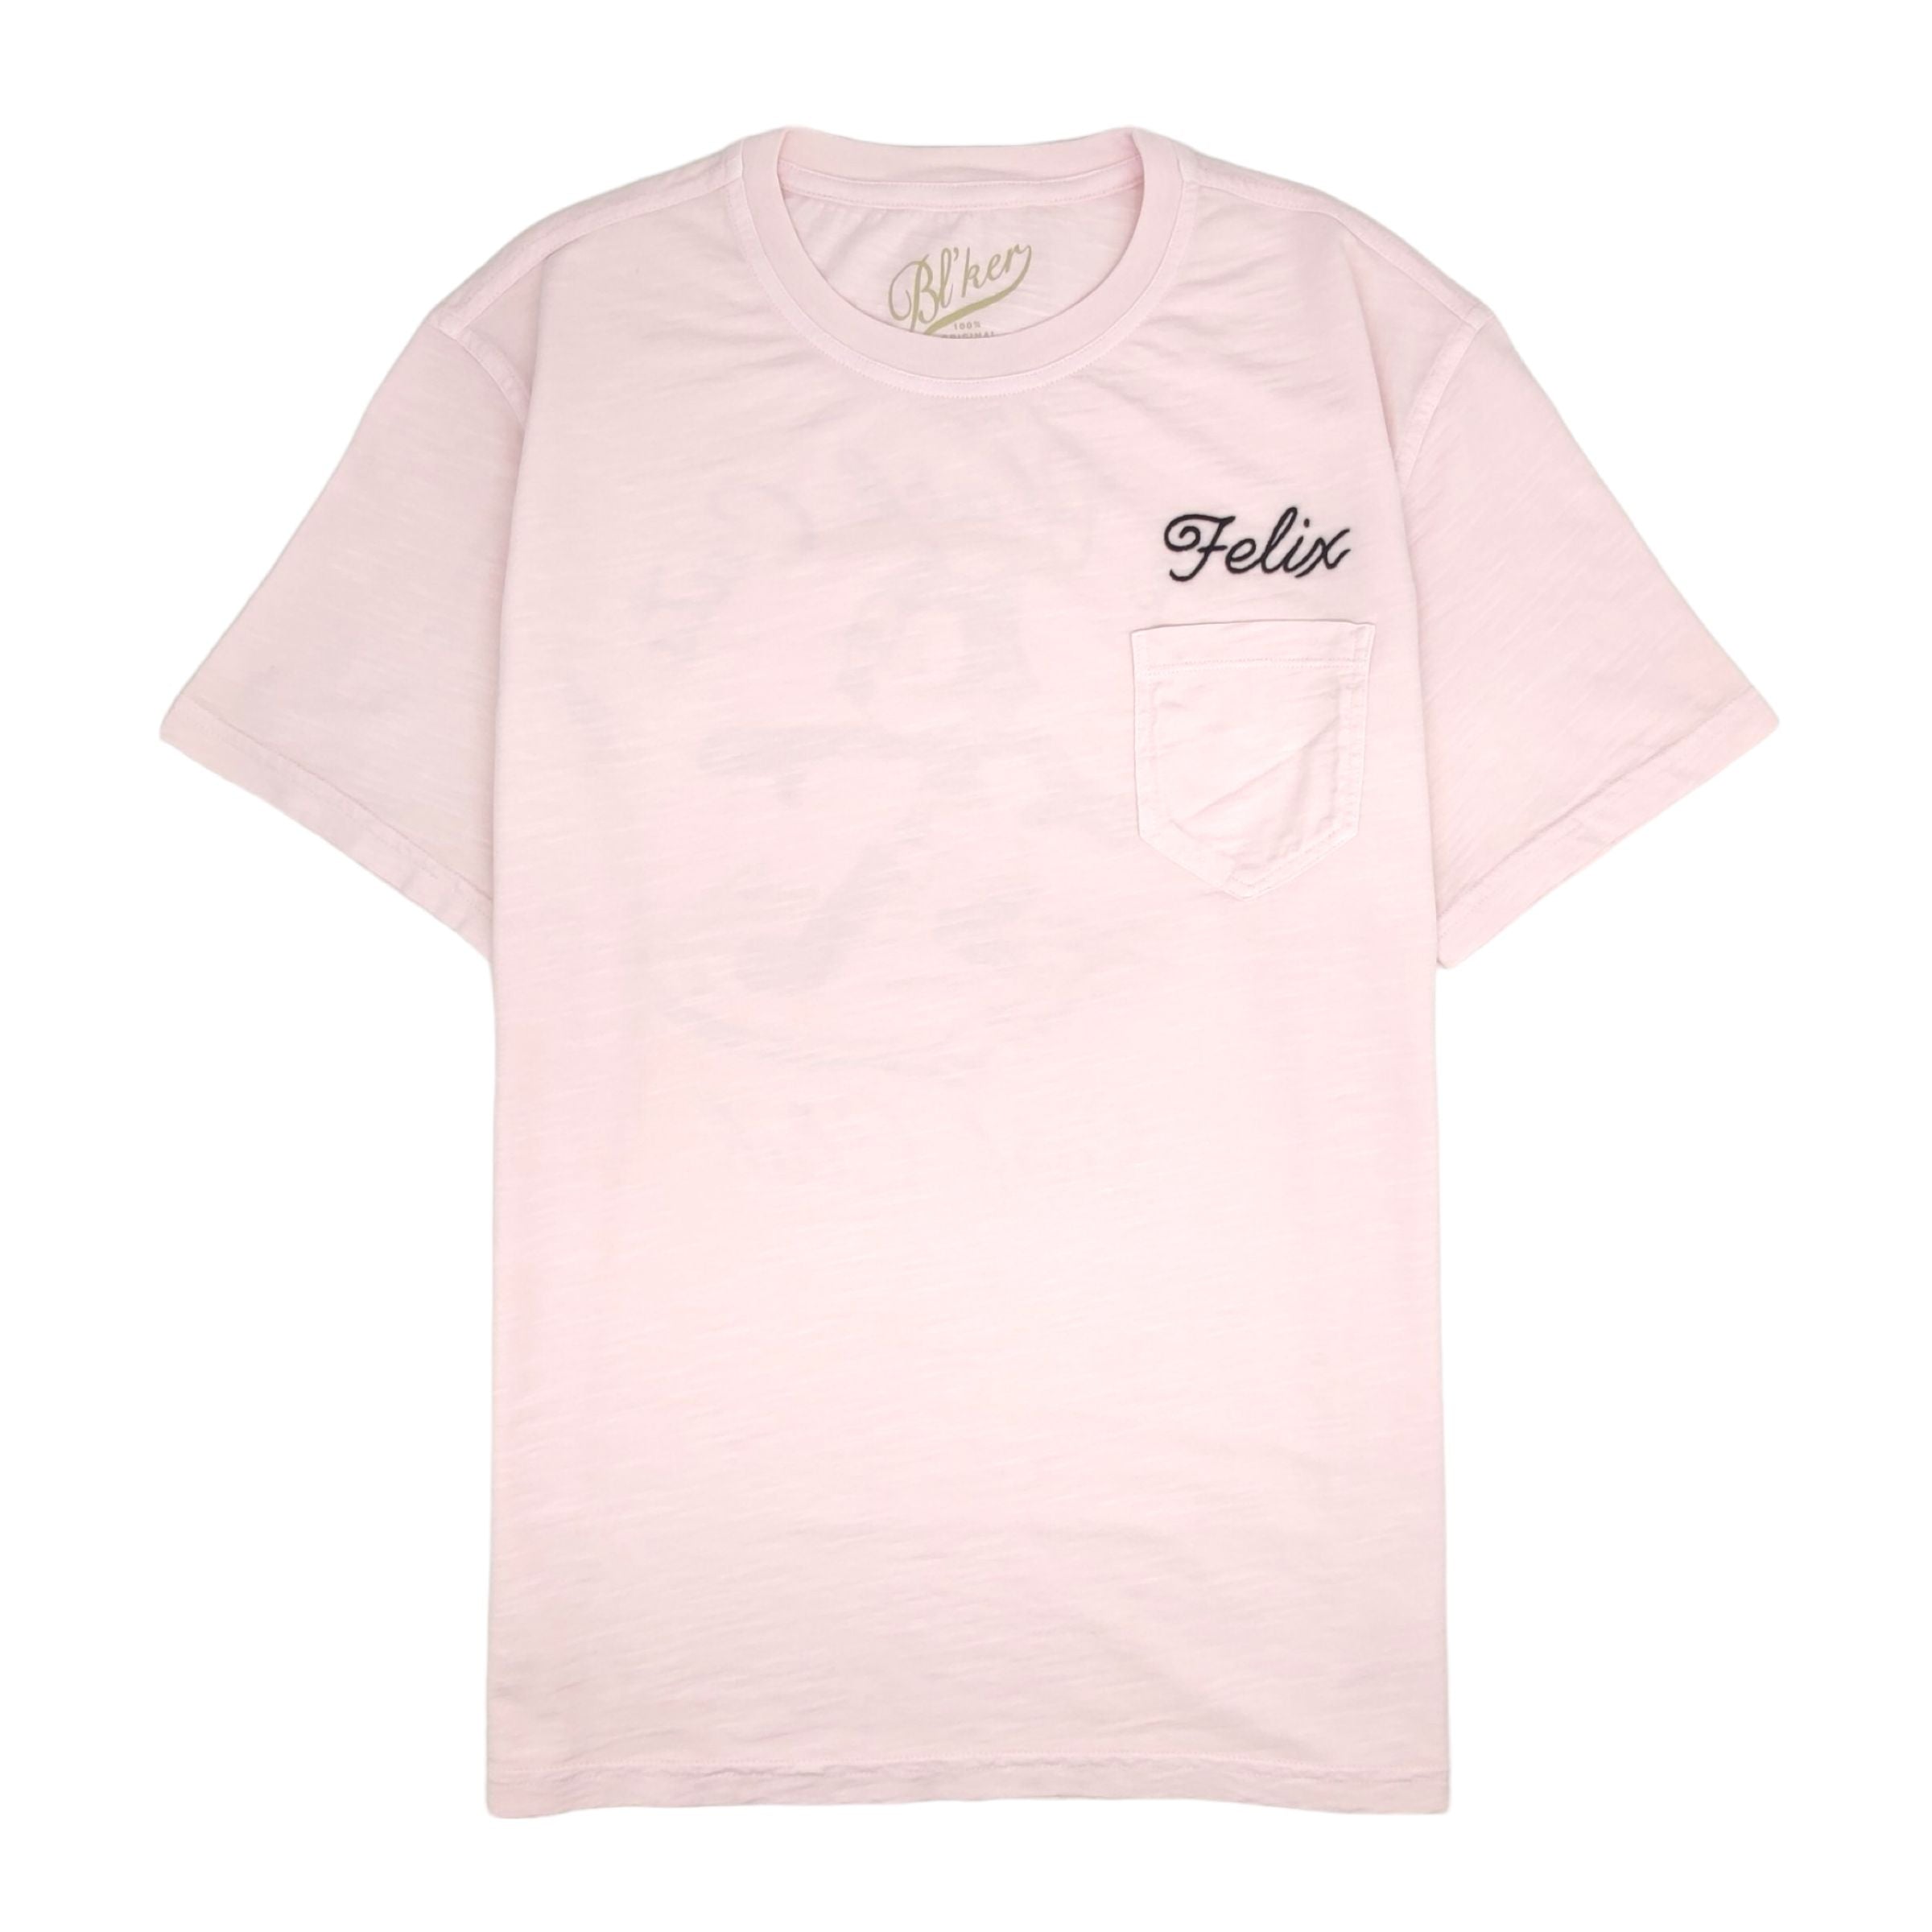 T-shirt Surf Club Felix Uomo Light Pink